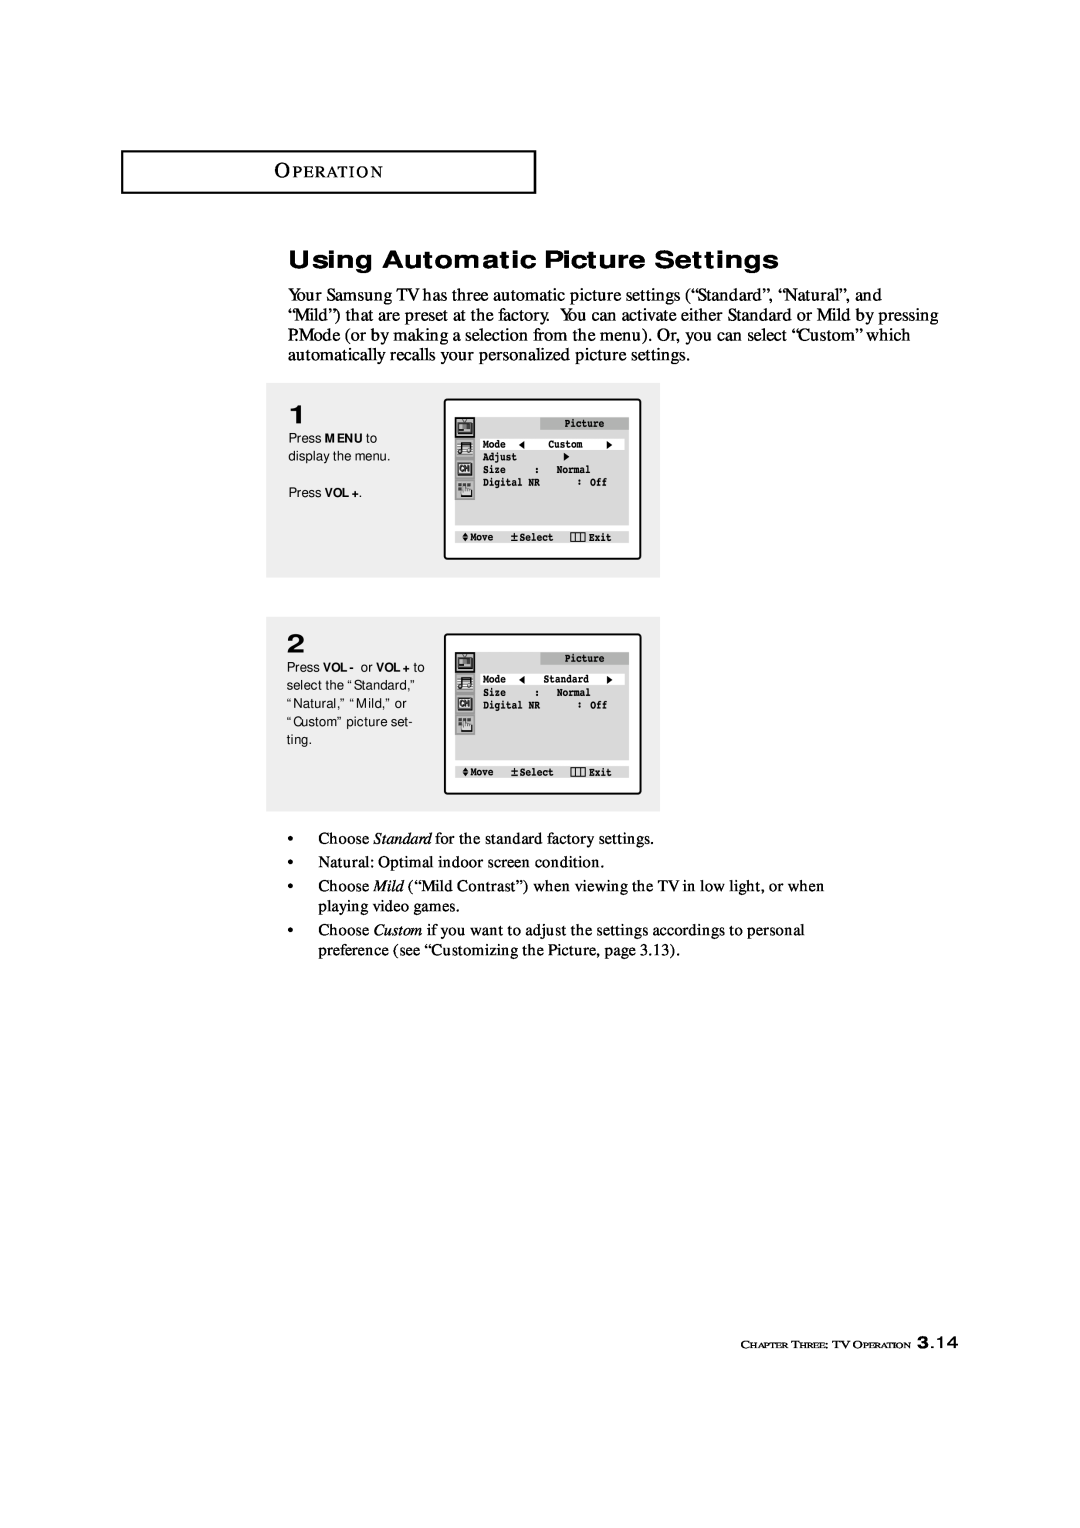 Samsung TXK 3276, TXL 3276, TXL 3676, TXK 3676 manual Using Automatic Picture Settings 